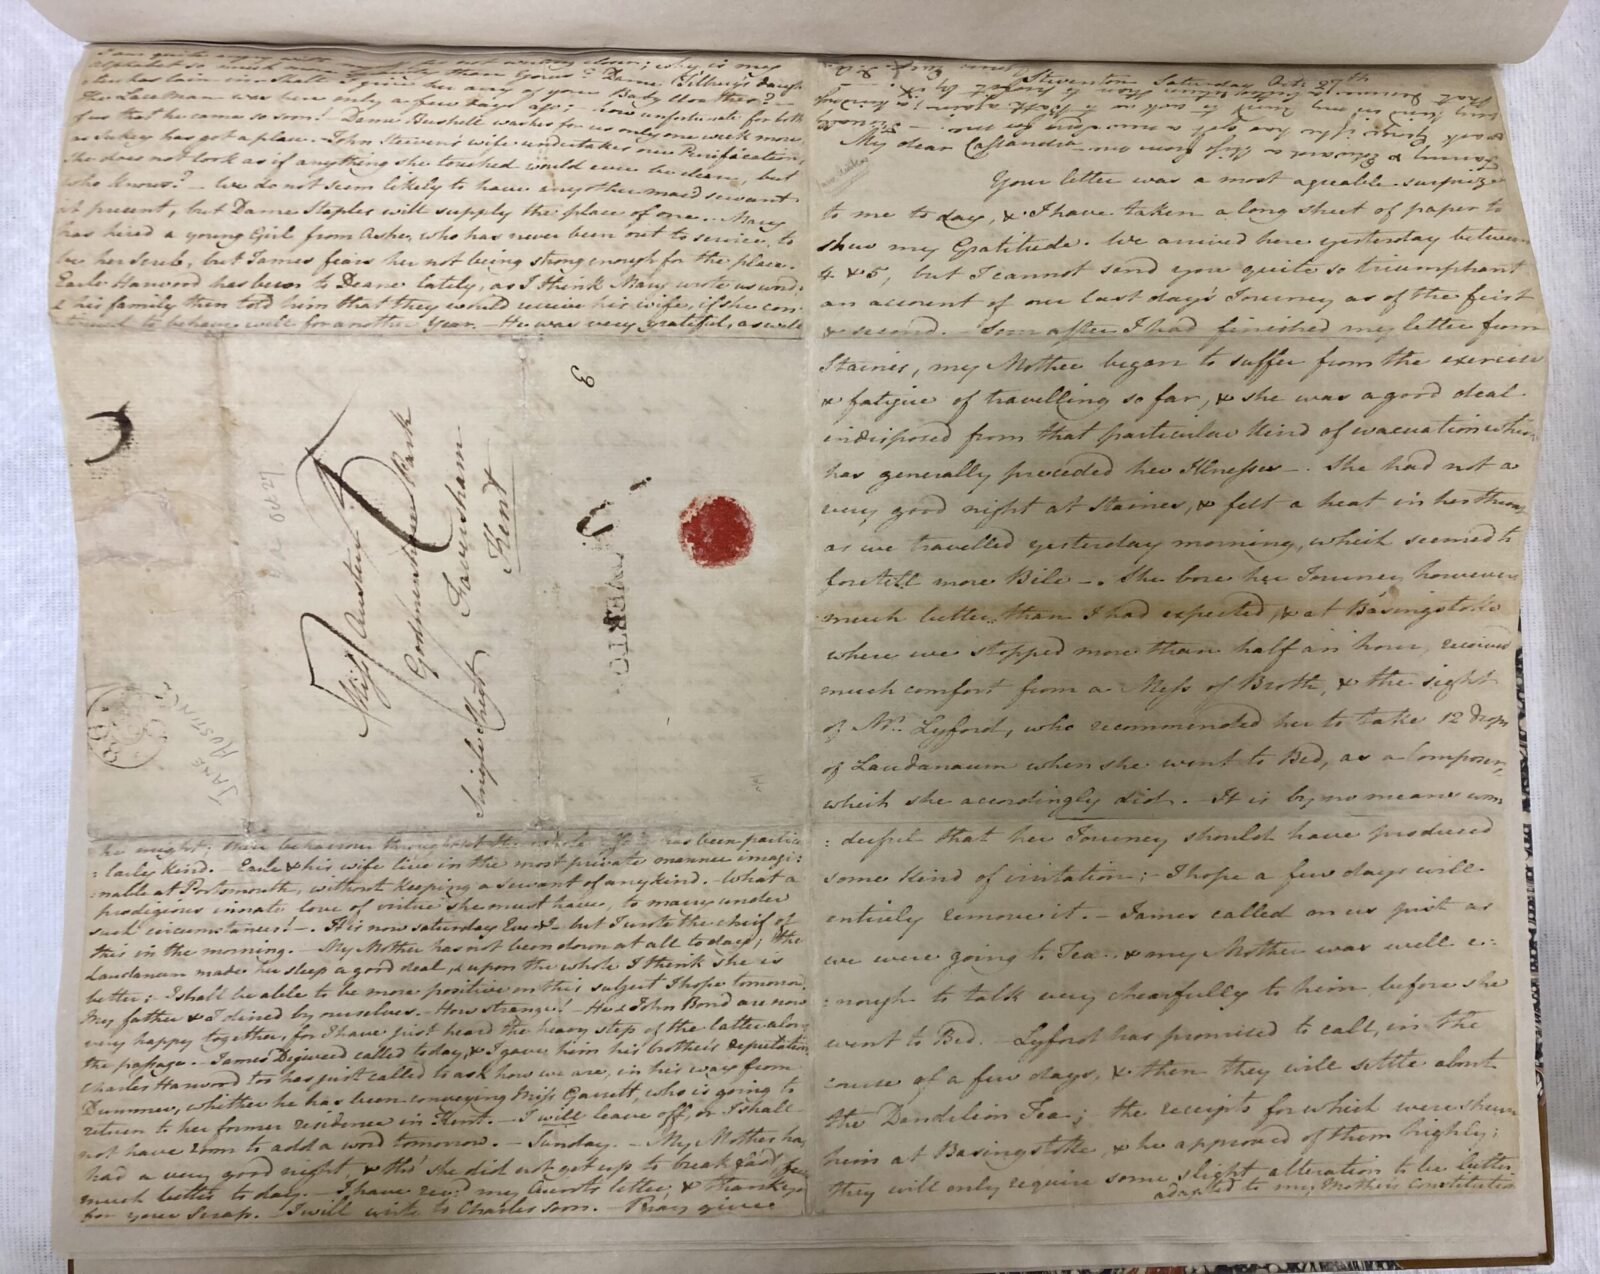 Letter from Jane Austen to Cassandra Austen Saturday 27th - Sunday 28th October 1798